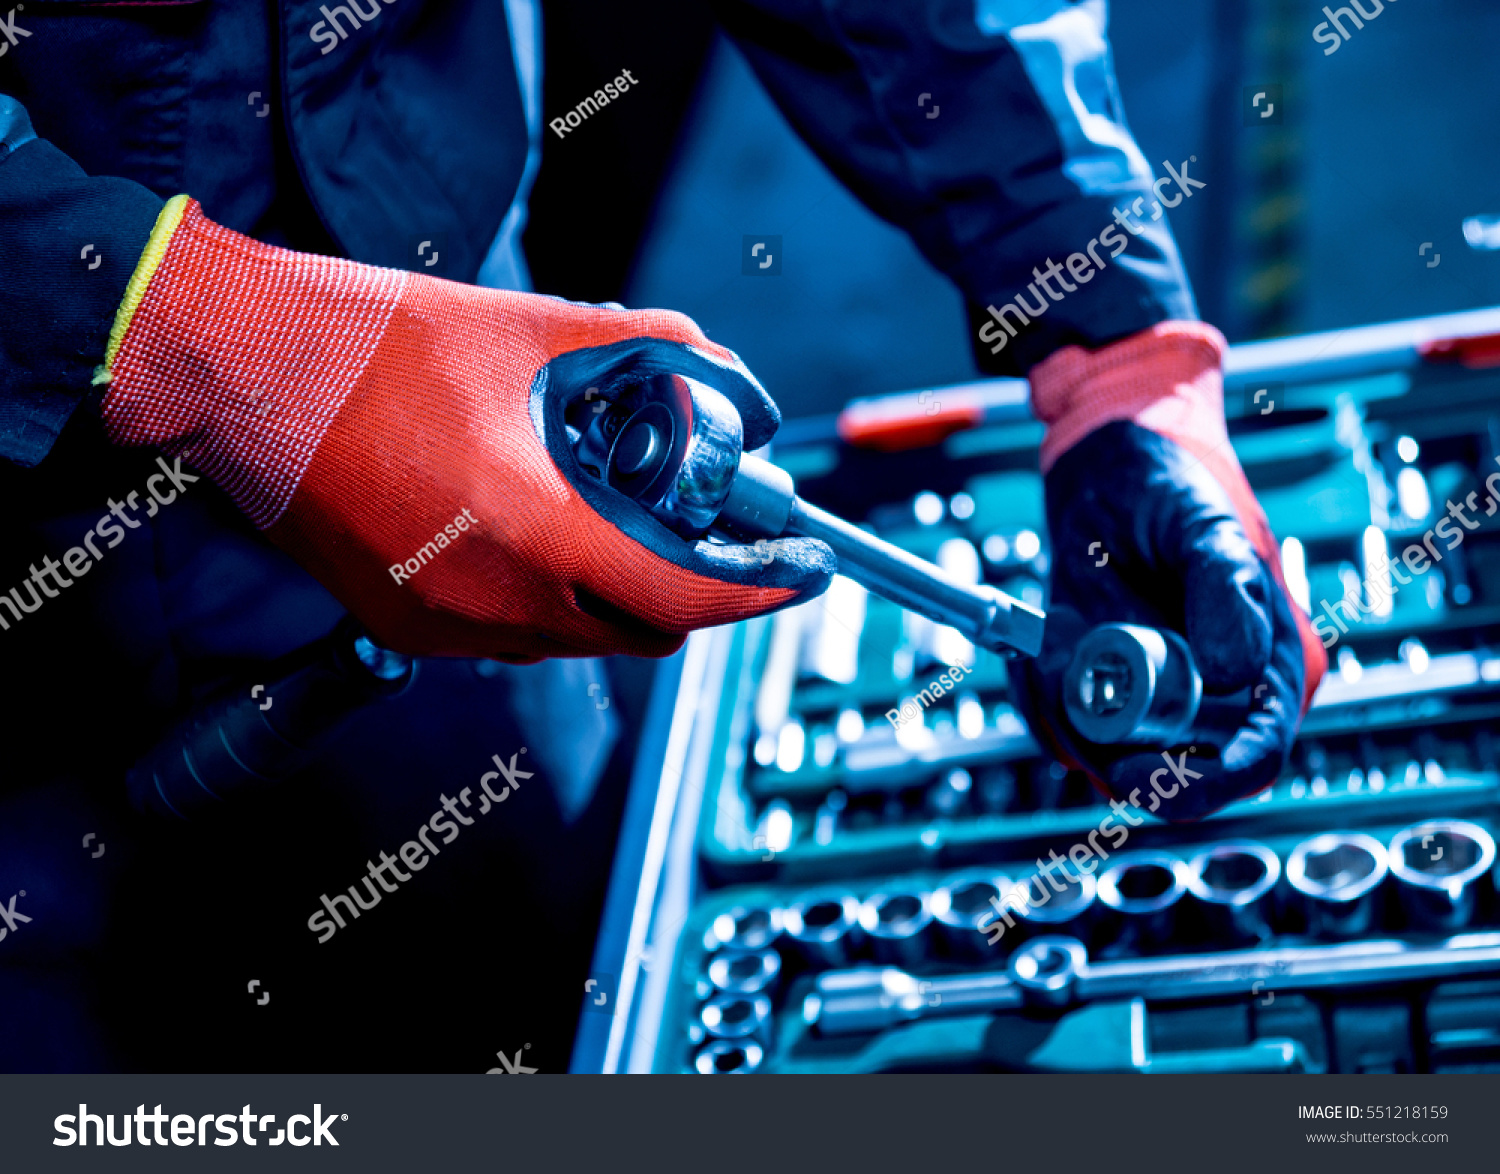 Tools In Auto Repair Service. Close Up Stock Photo 551218159 : Shutterstock - Stock Photo Tools In Auto Repair Service Close Up 551218159